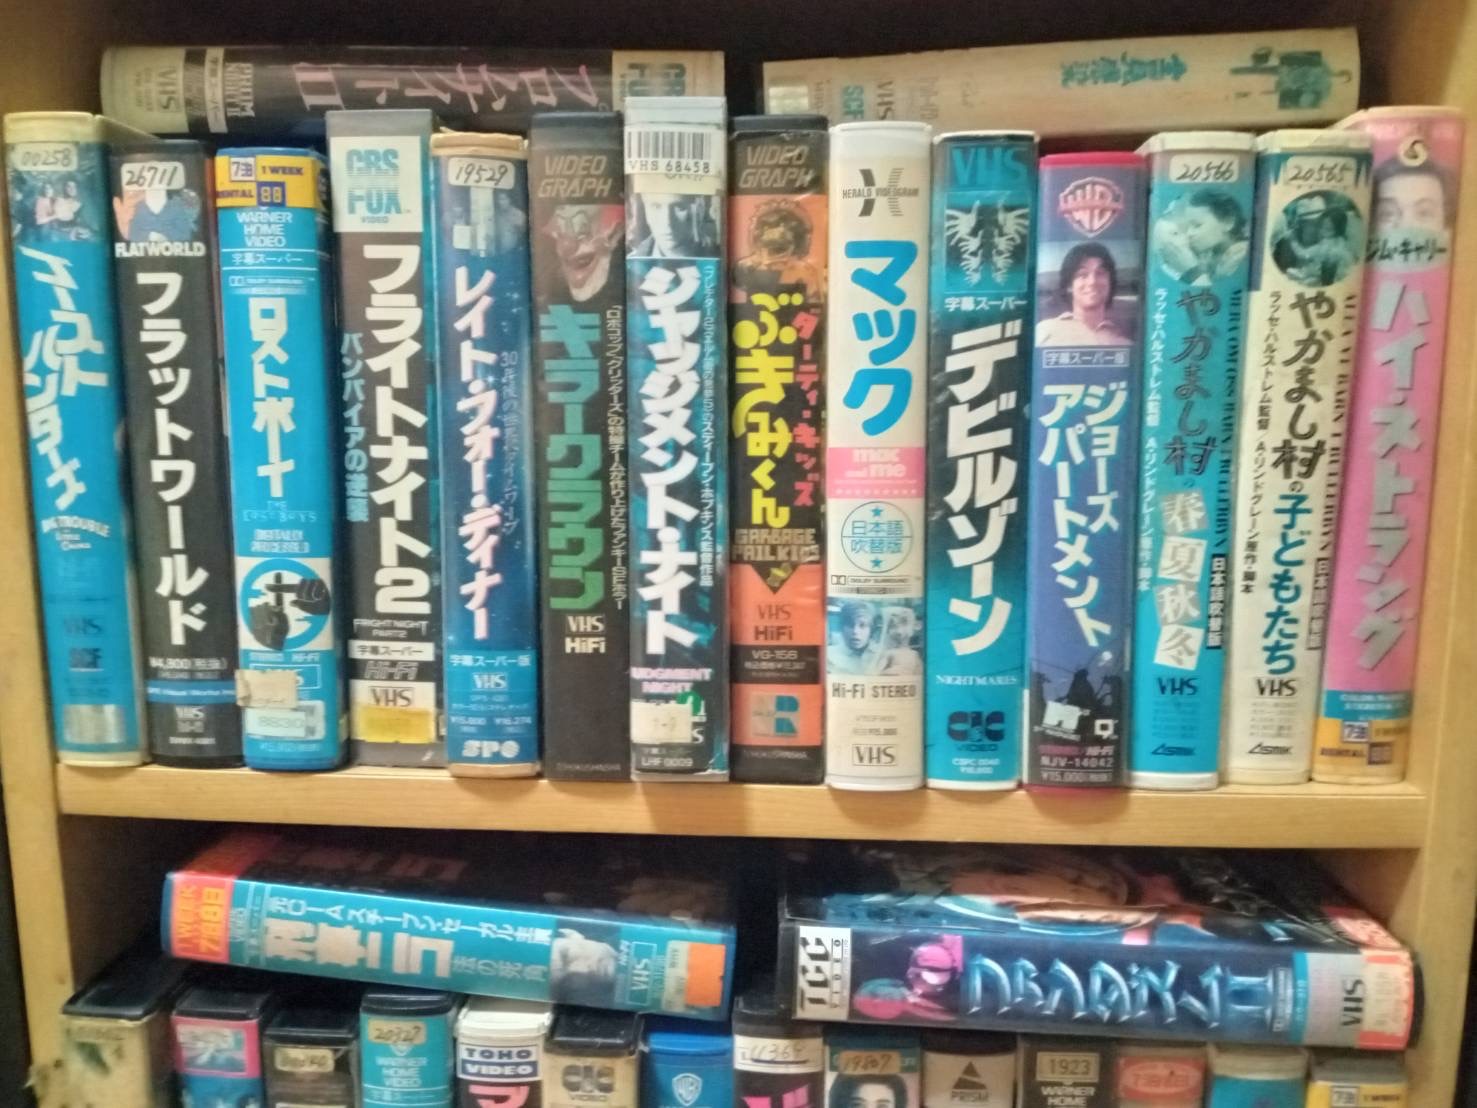 鎌田順也提供の自宅VHS棚写真